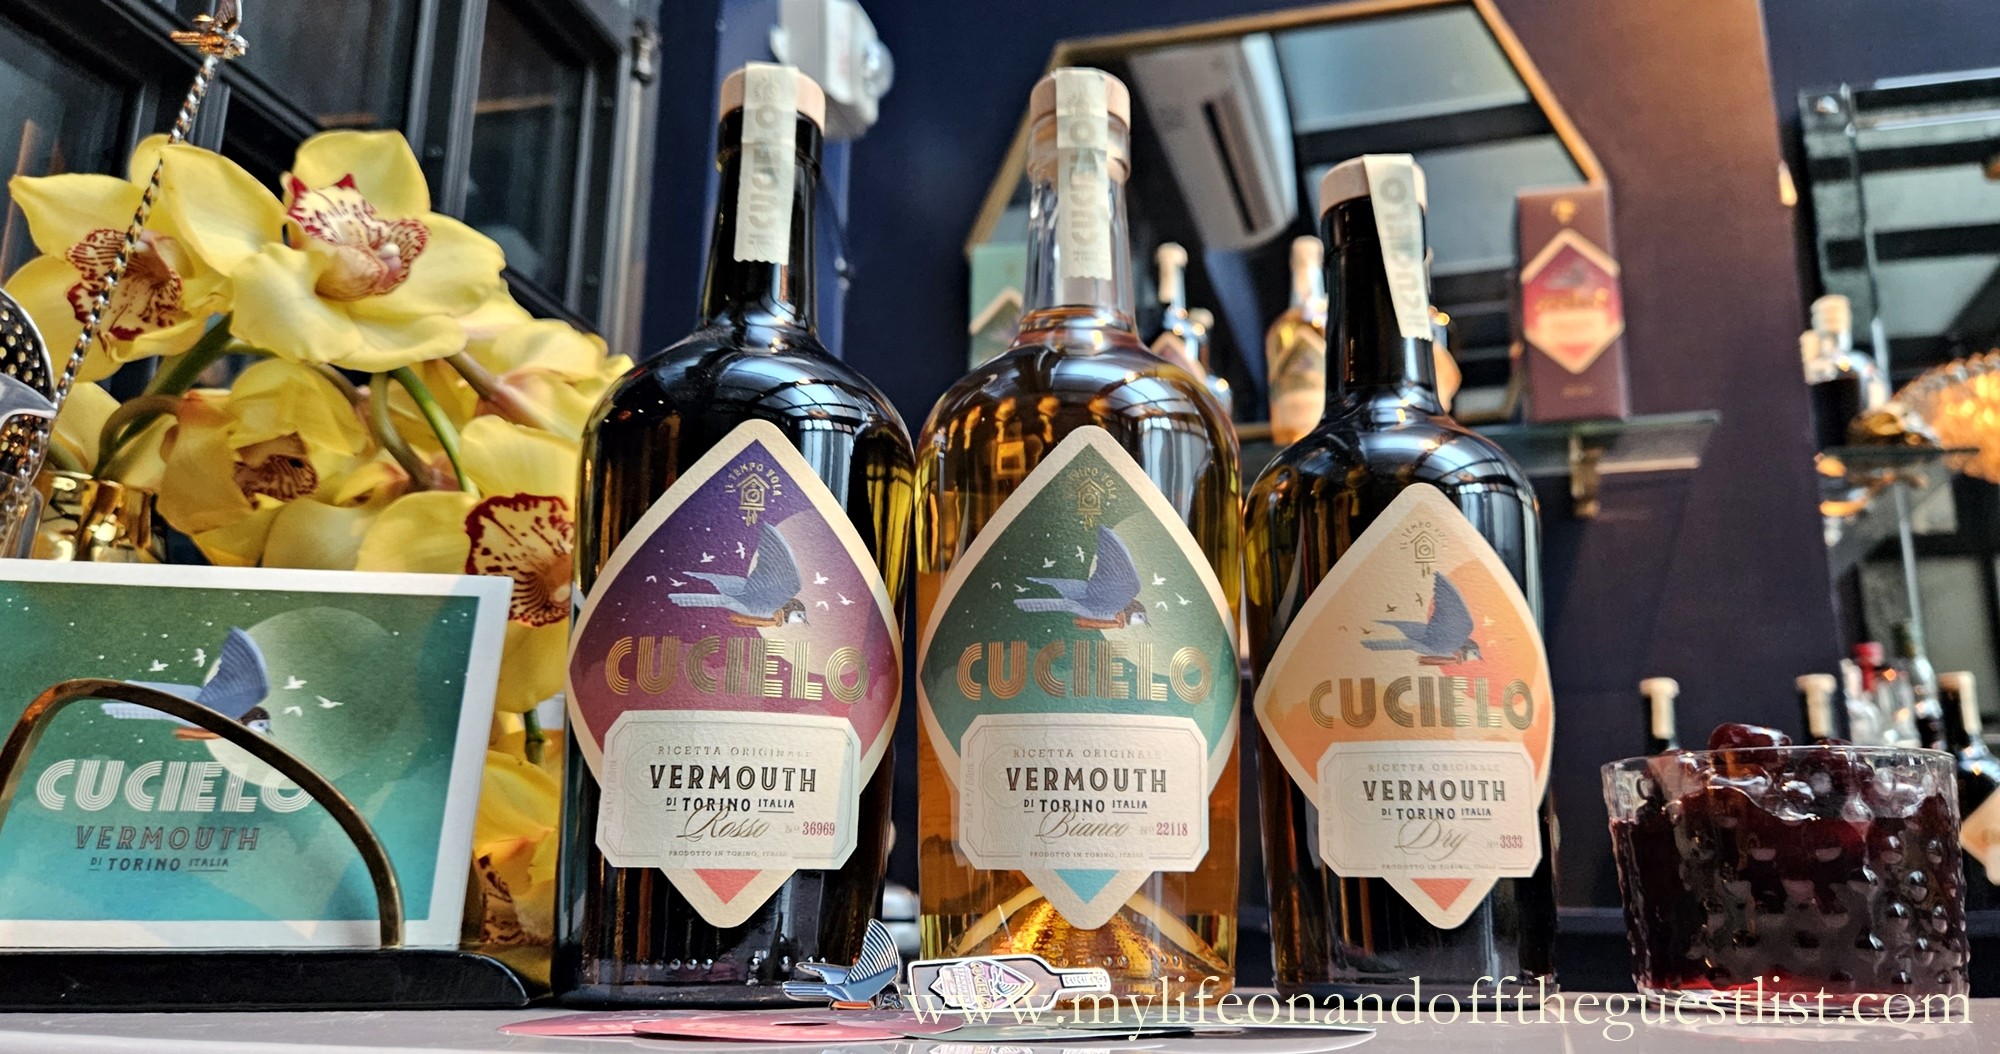 Sneak Peak of Cucielo Vermouth Di Torino Ahead of its US Launch